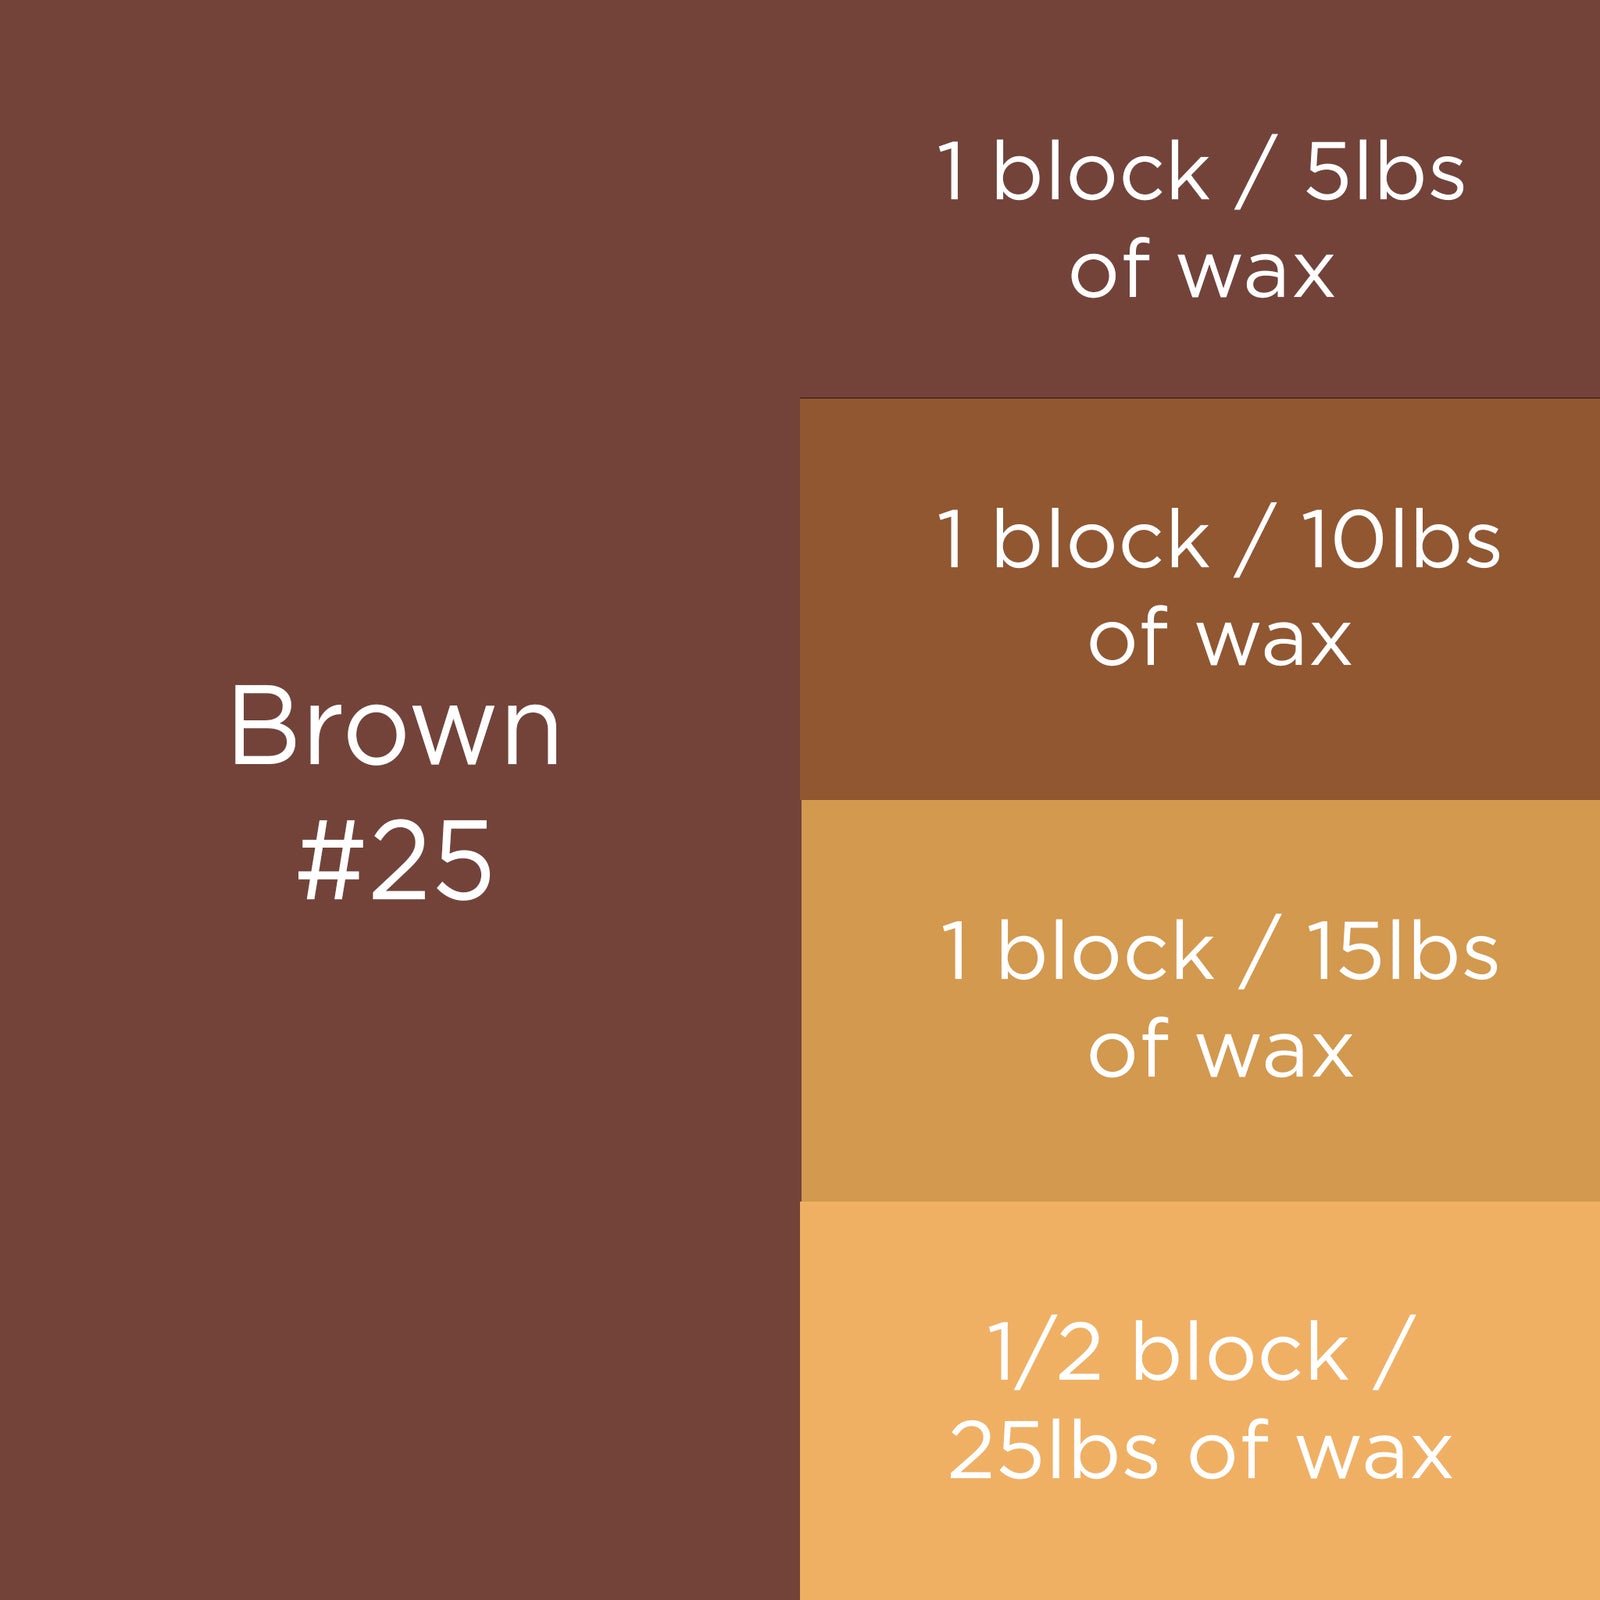 #25 Brown Candle Dye Block